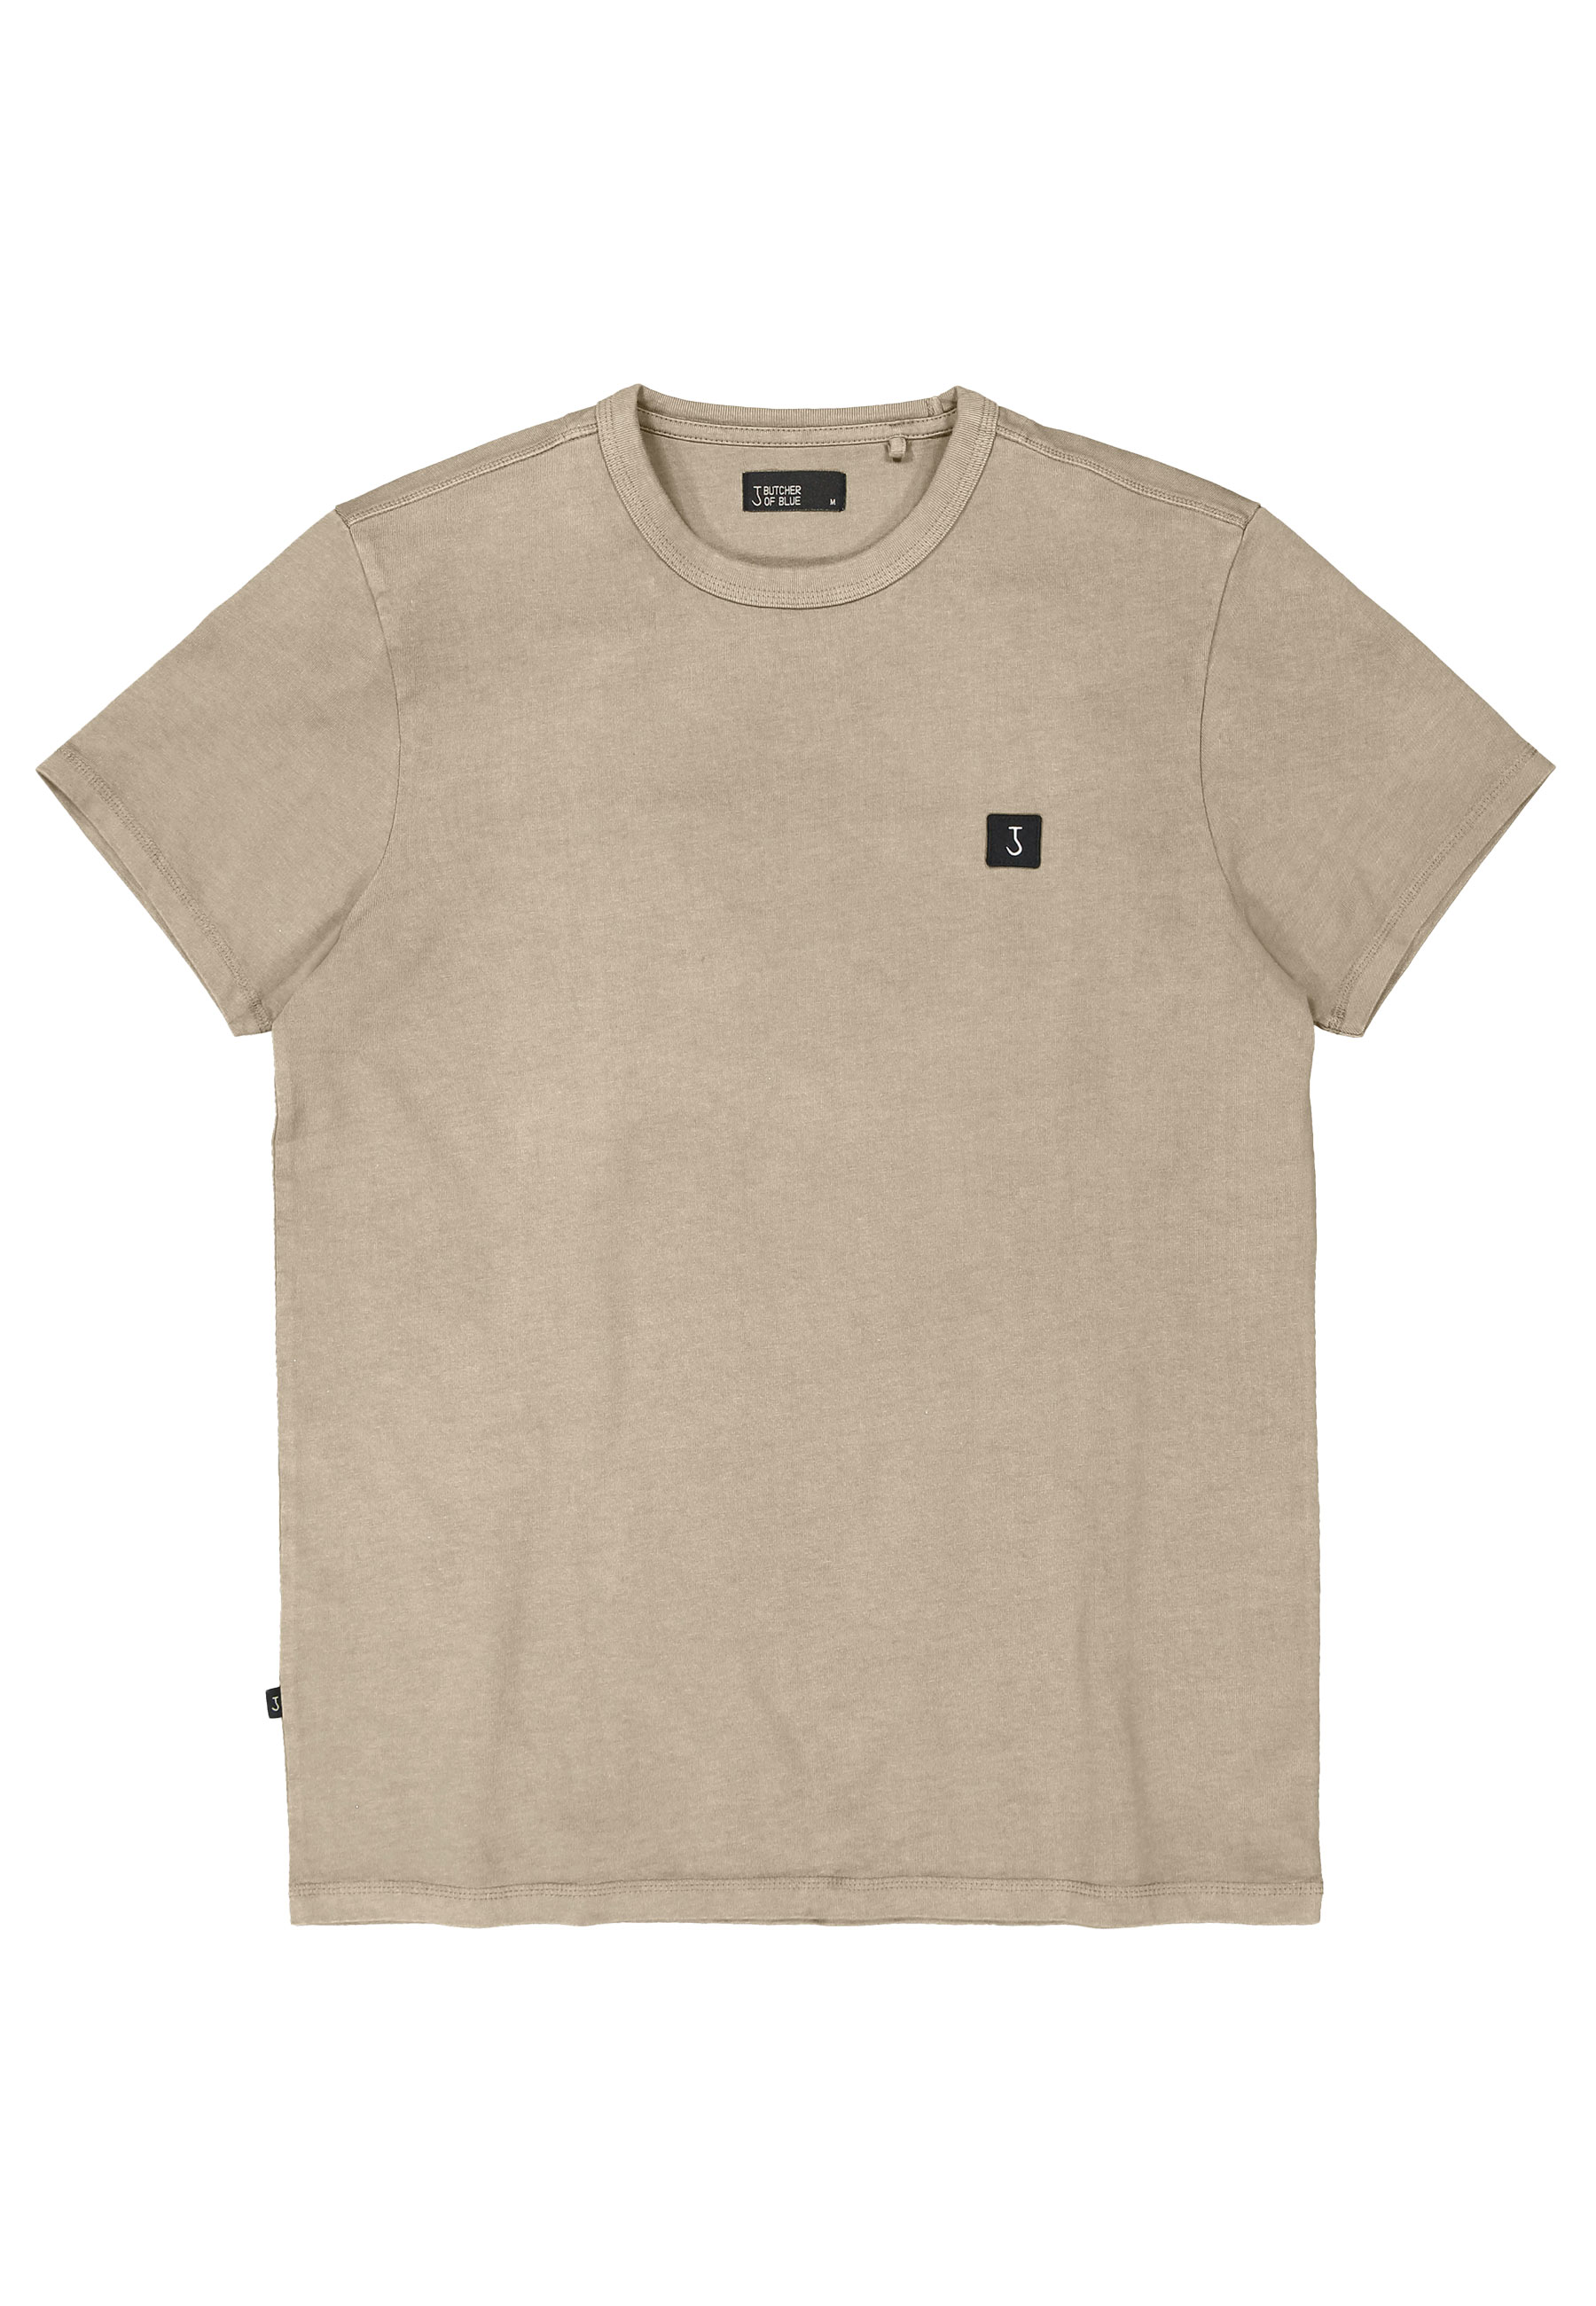 Shirt Beige Army t-shirts beige